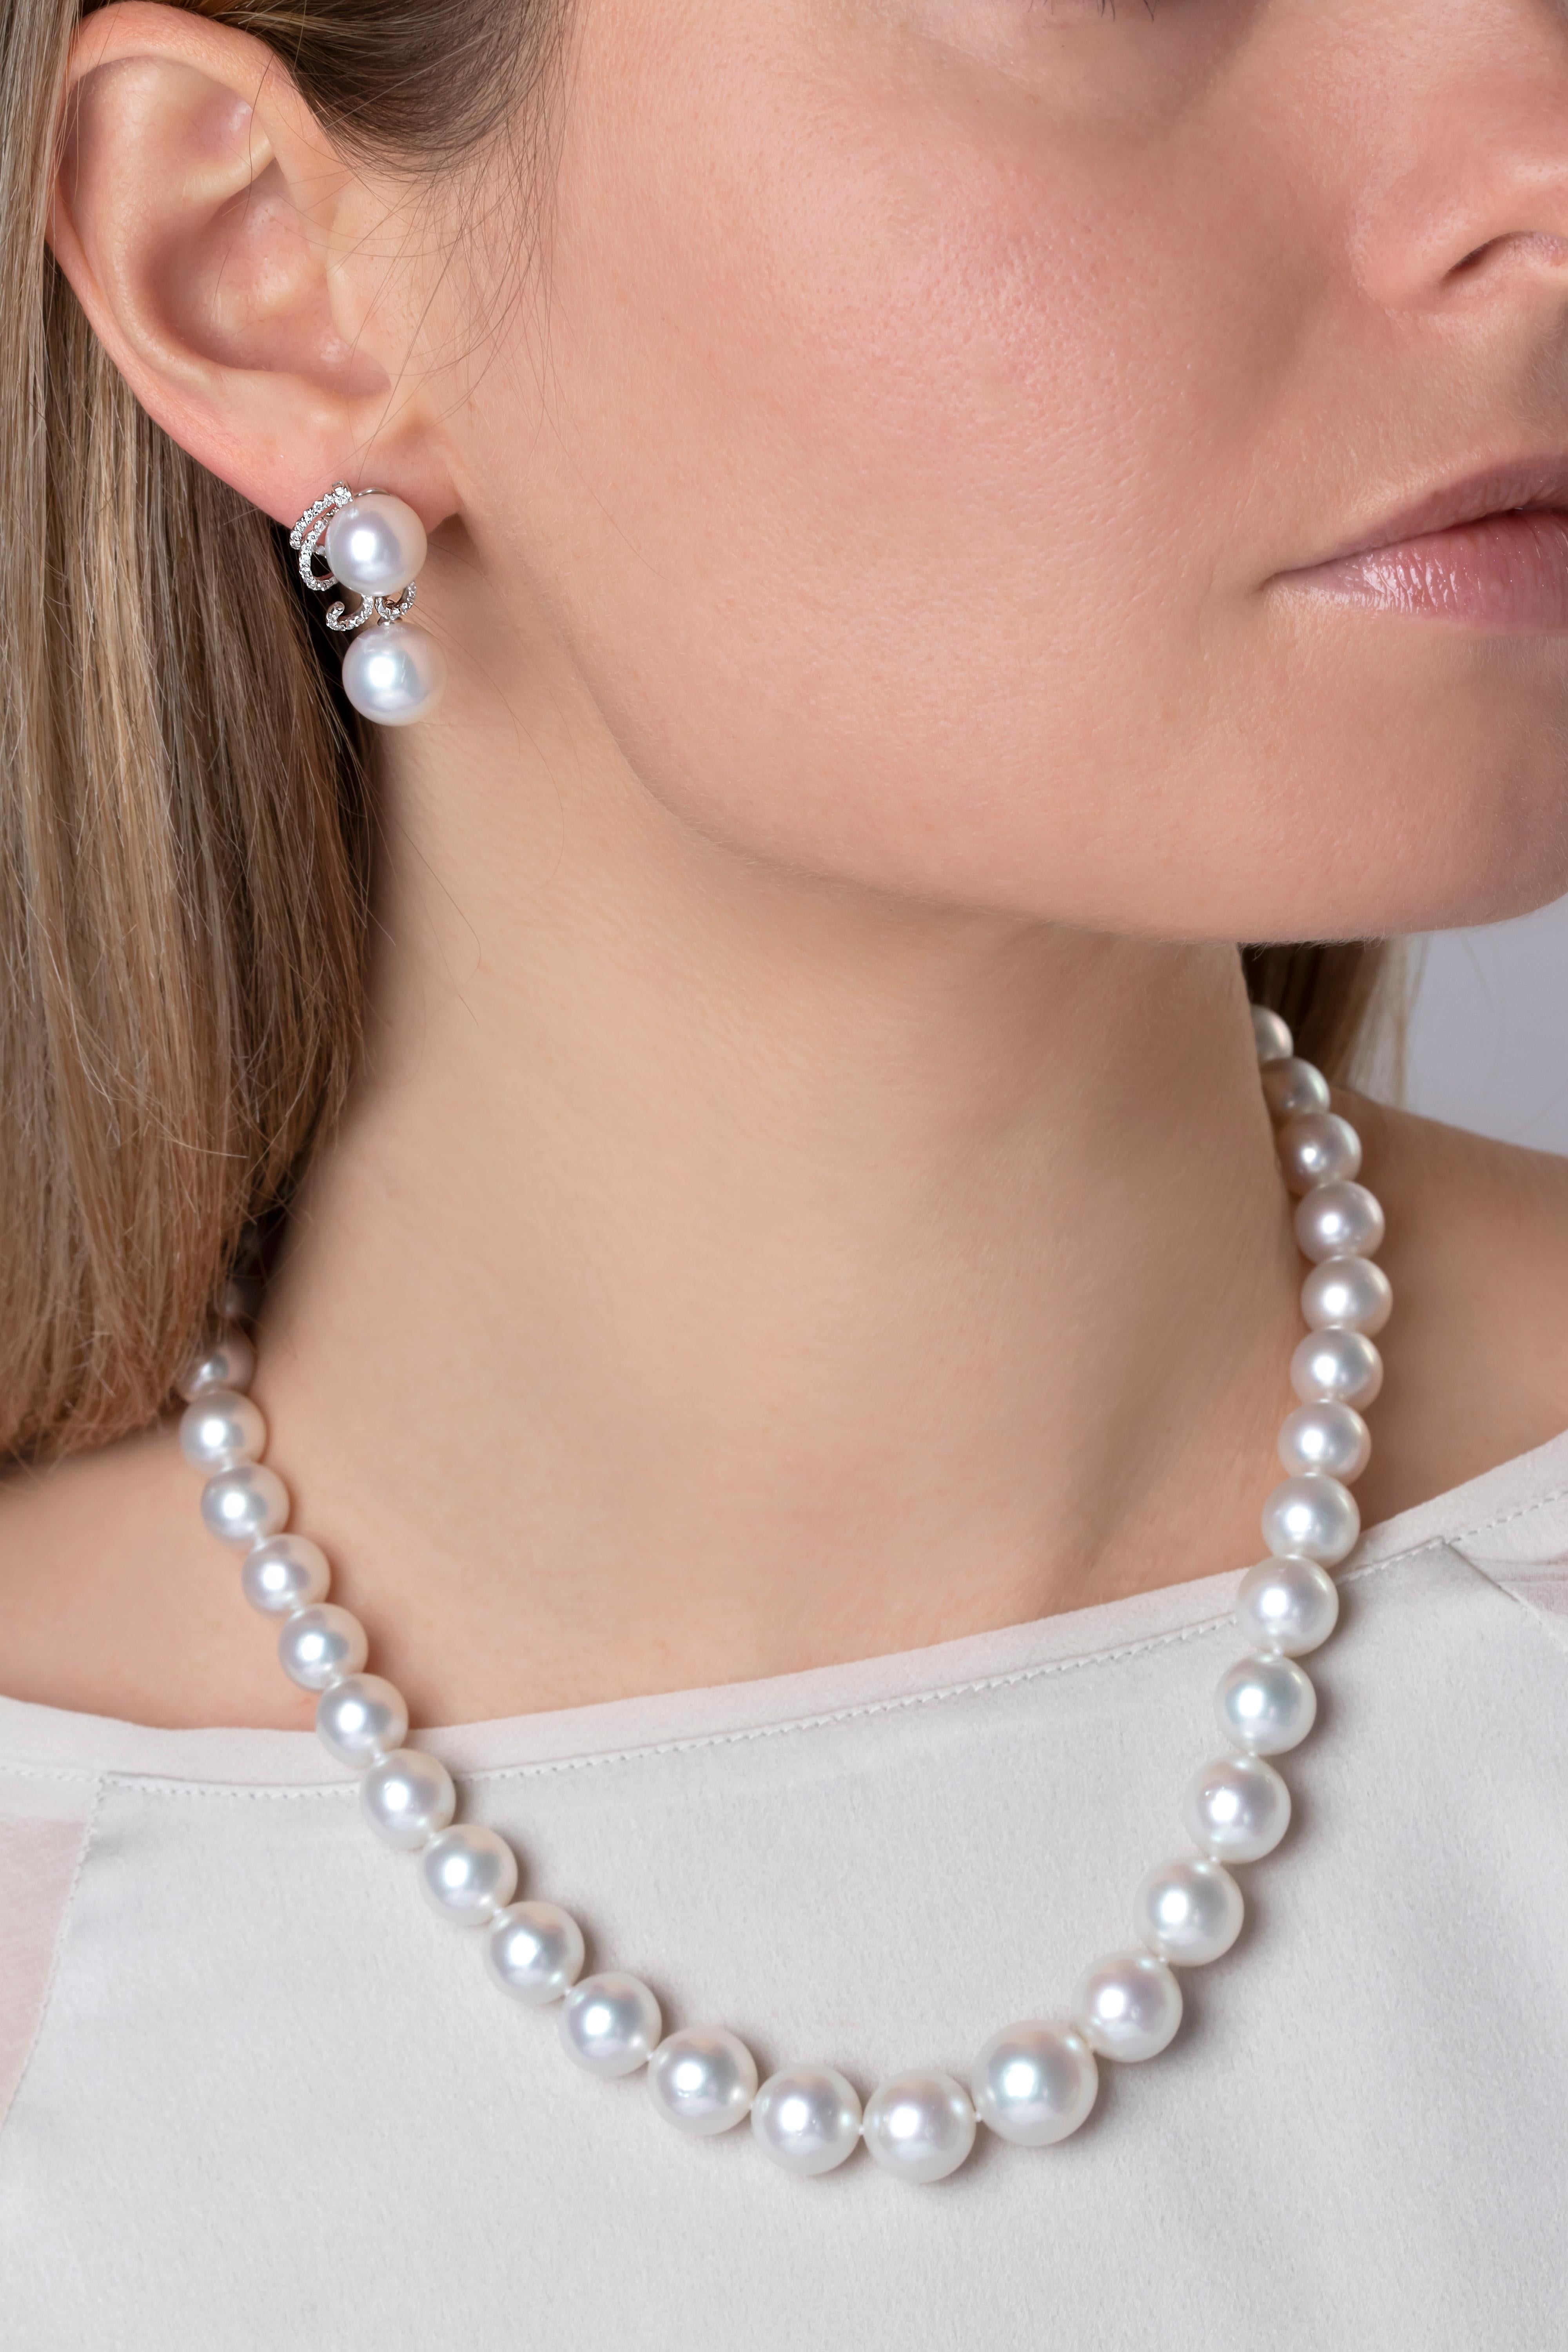 Women's Yoko London South Sea Pearls and Diamond Earrings in 18 Karat White Gold